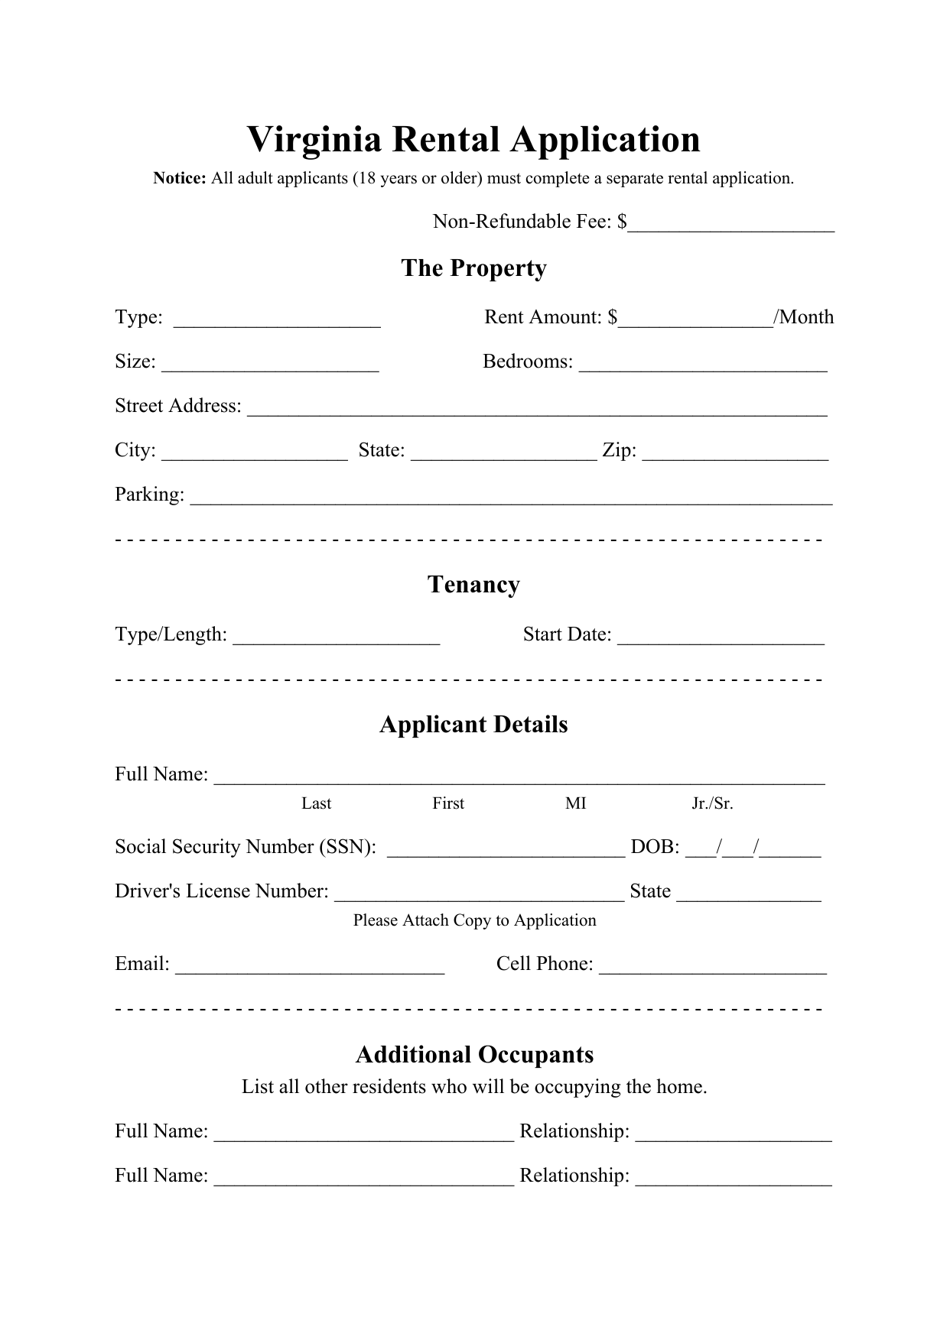 virginia rental application form download printable pdf templateroller